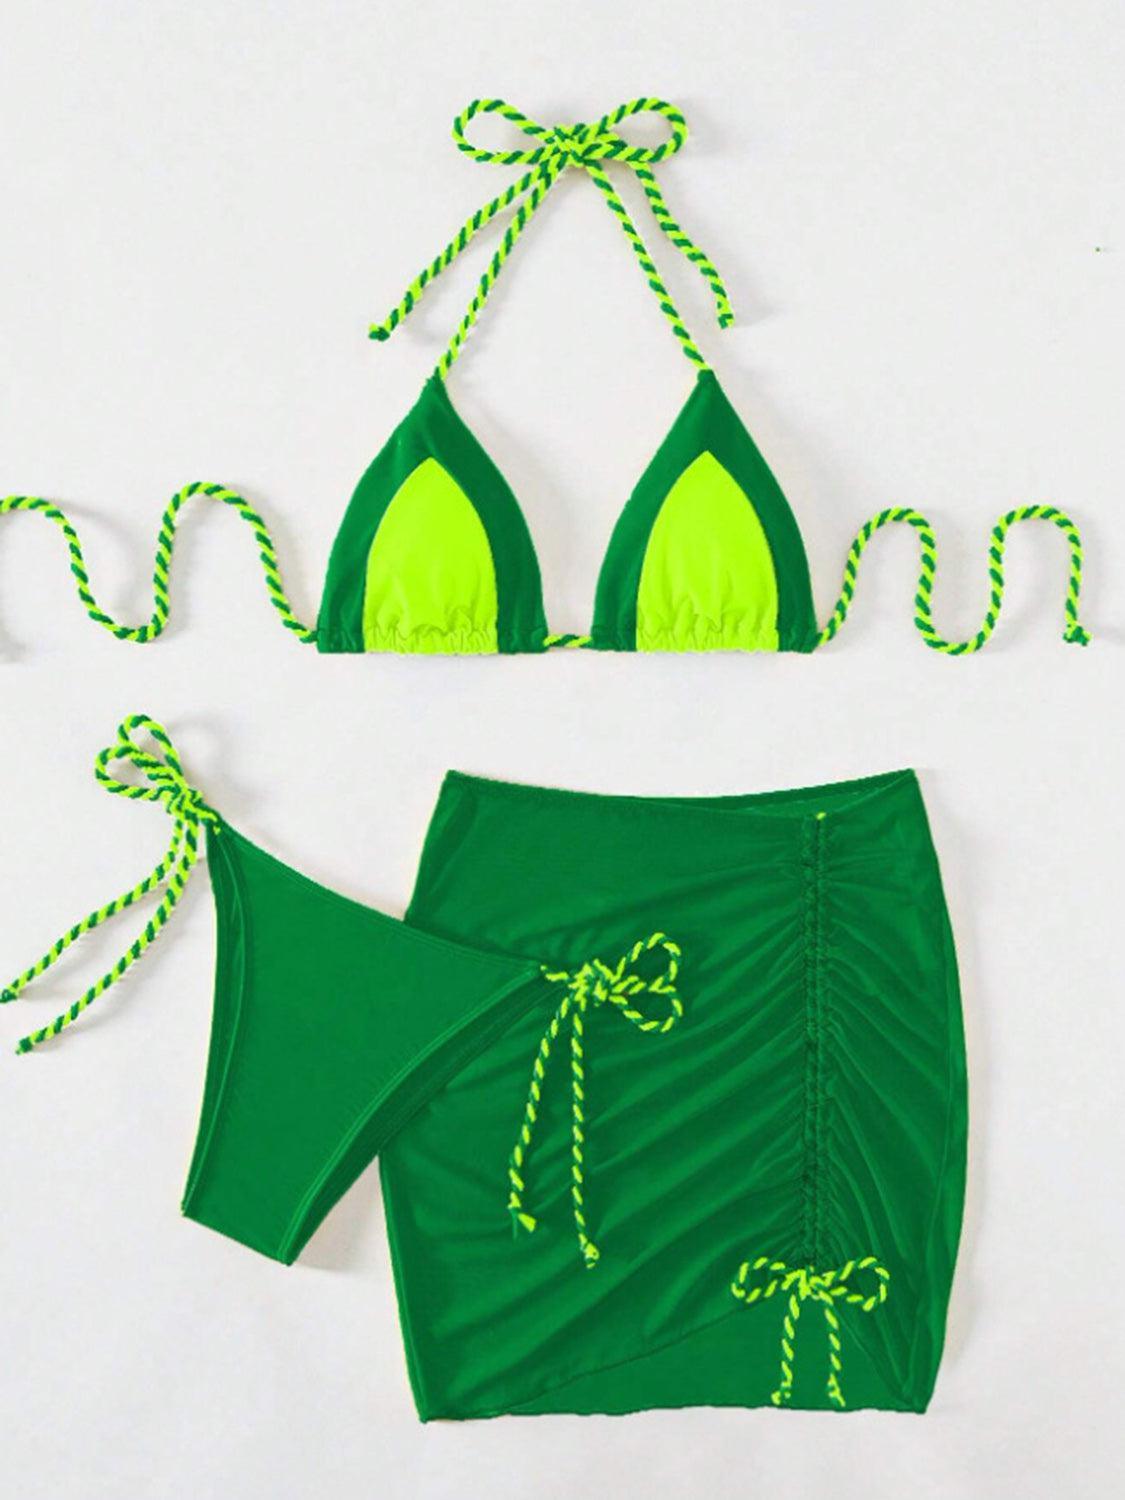 a bikini top and skirt with a green bikini bottom